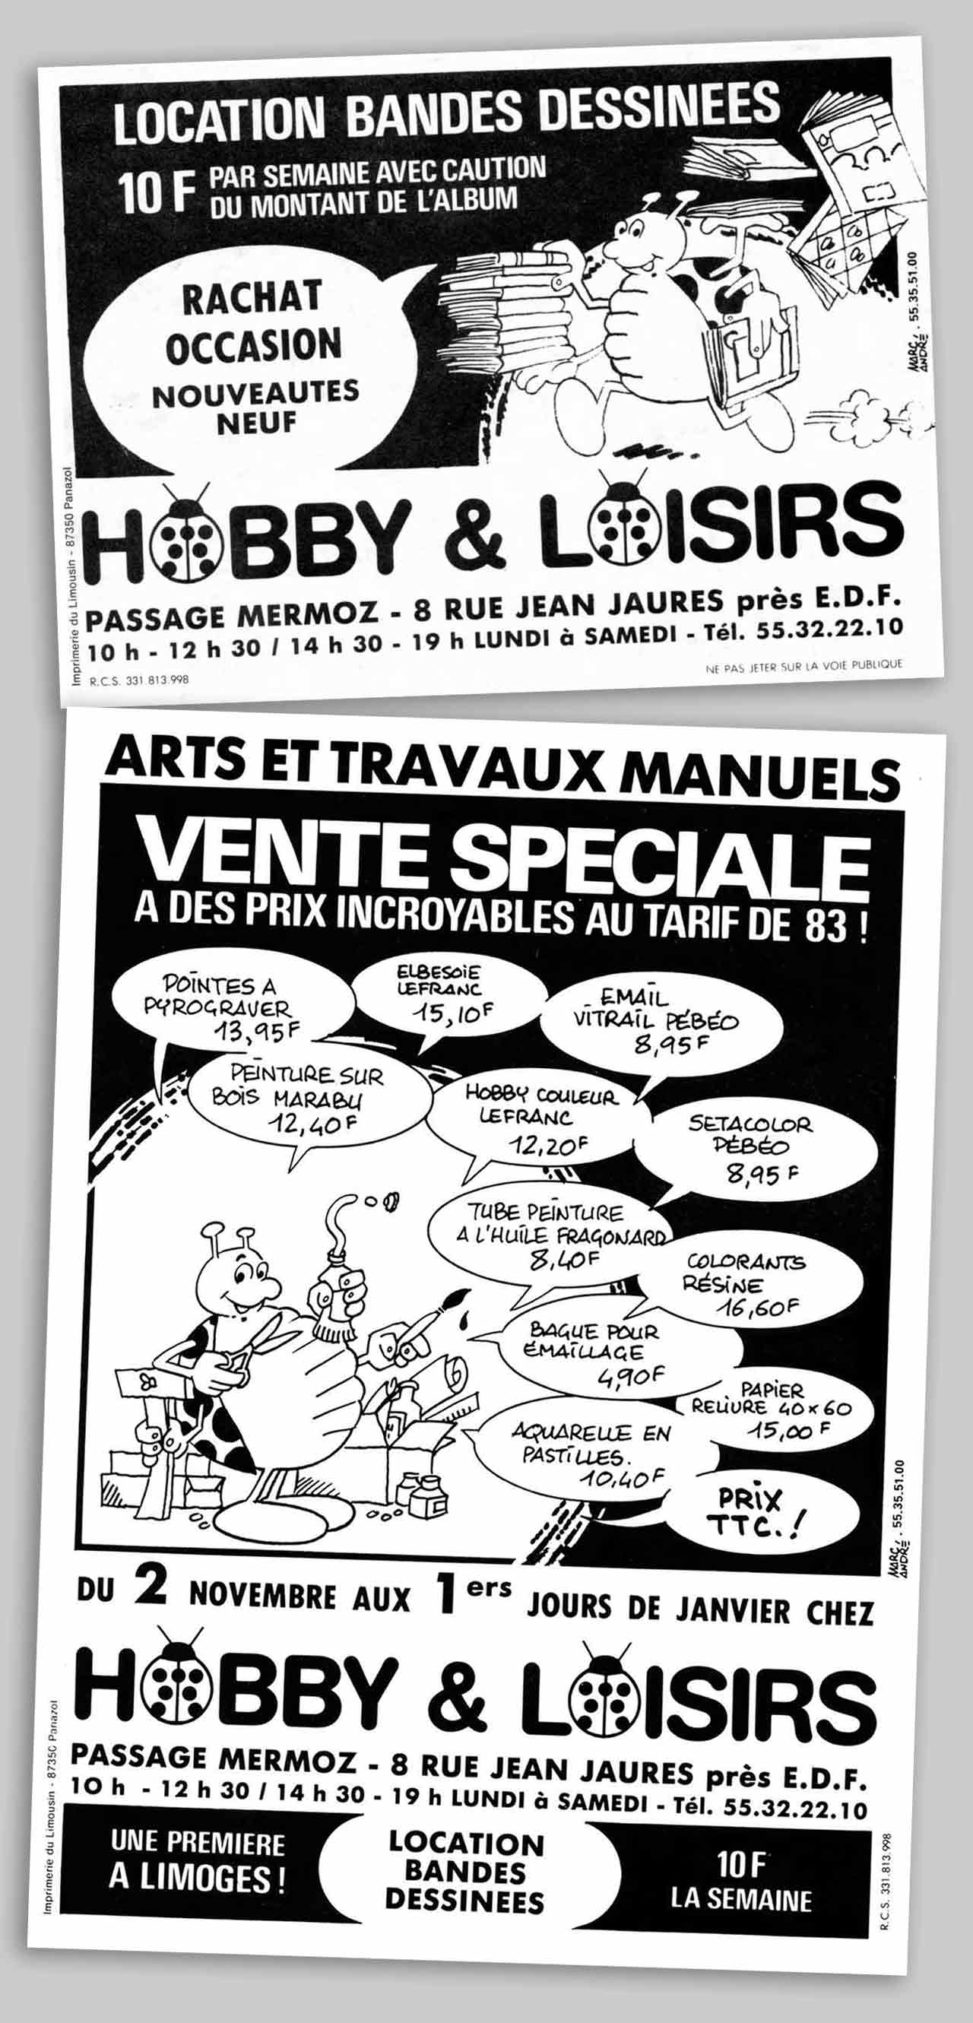 Flyers pour Hobby & Loisirs - Passage Mermoz 1985-86 - Marc-André BD Illustration Graphisme Limoges